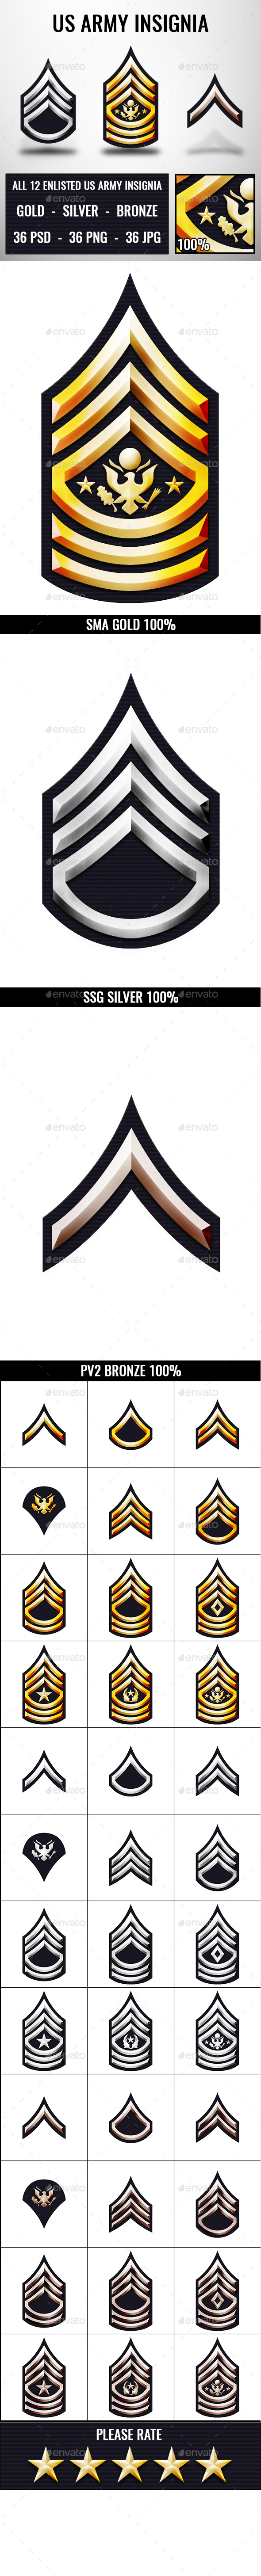 Us military insignia 